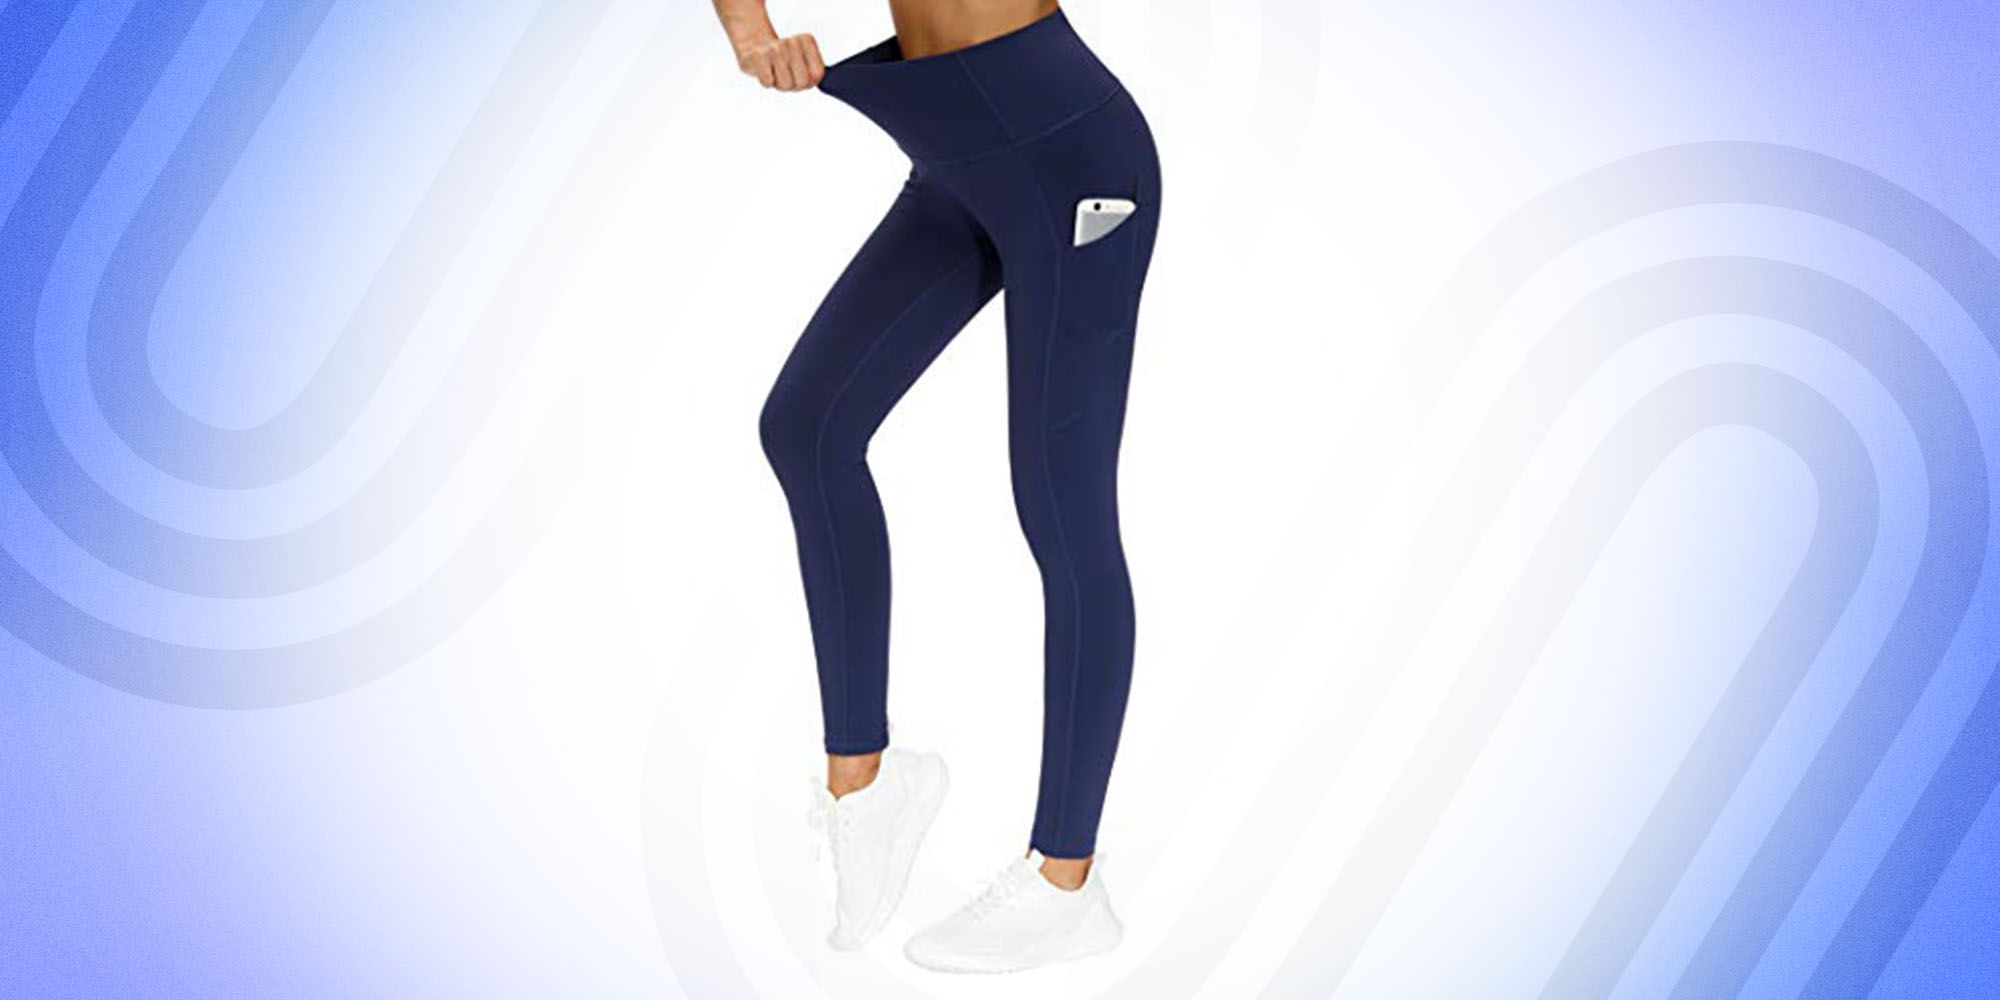 XL - 3/4 Pants Avia Training Yoga Legging, Women's Fashion